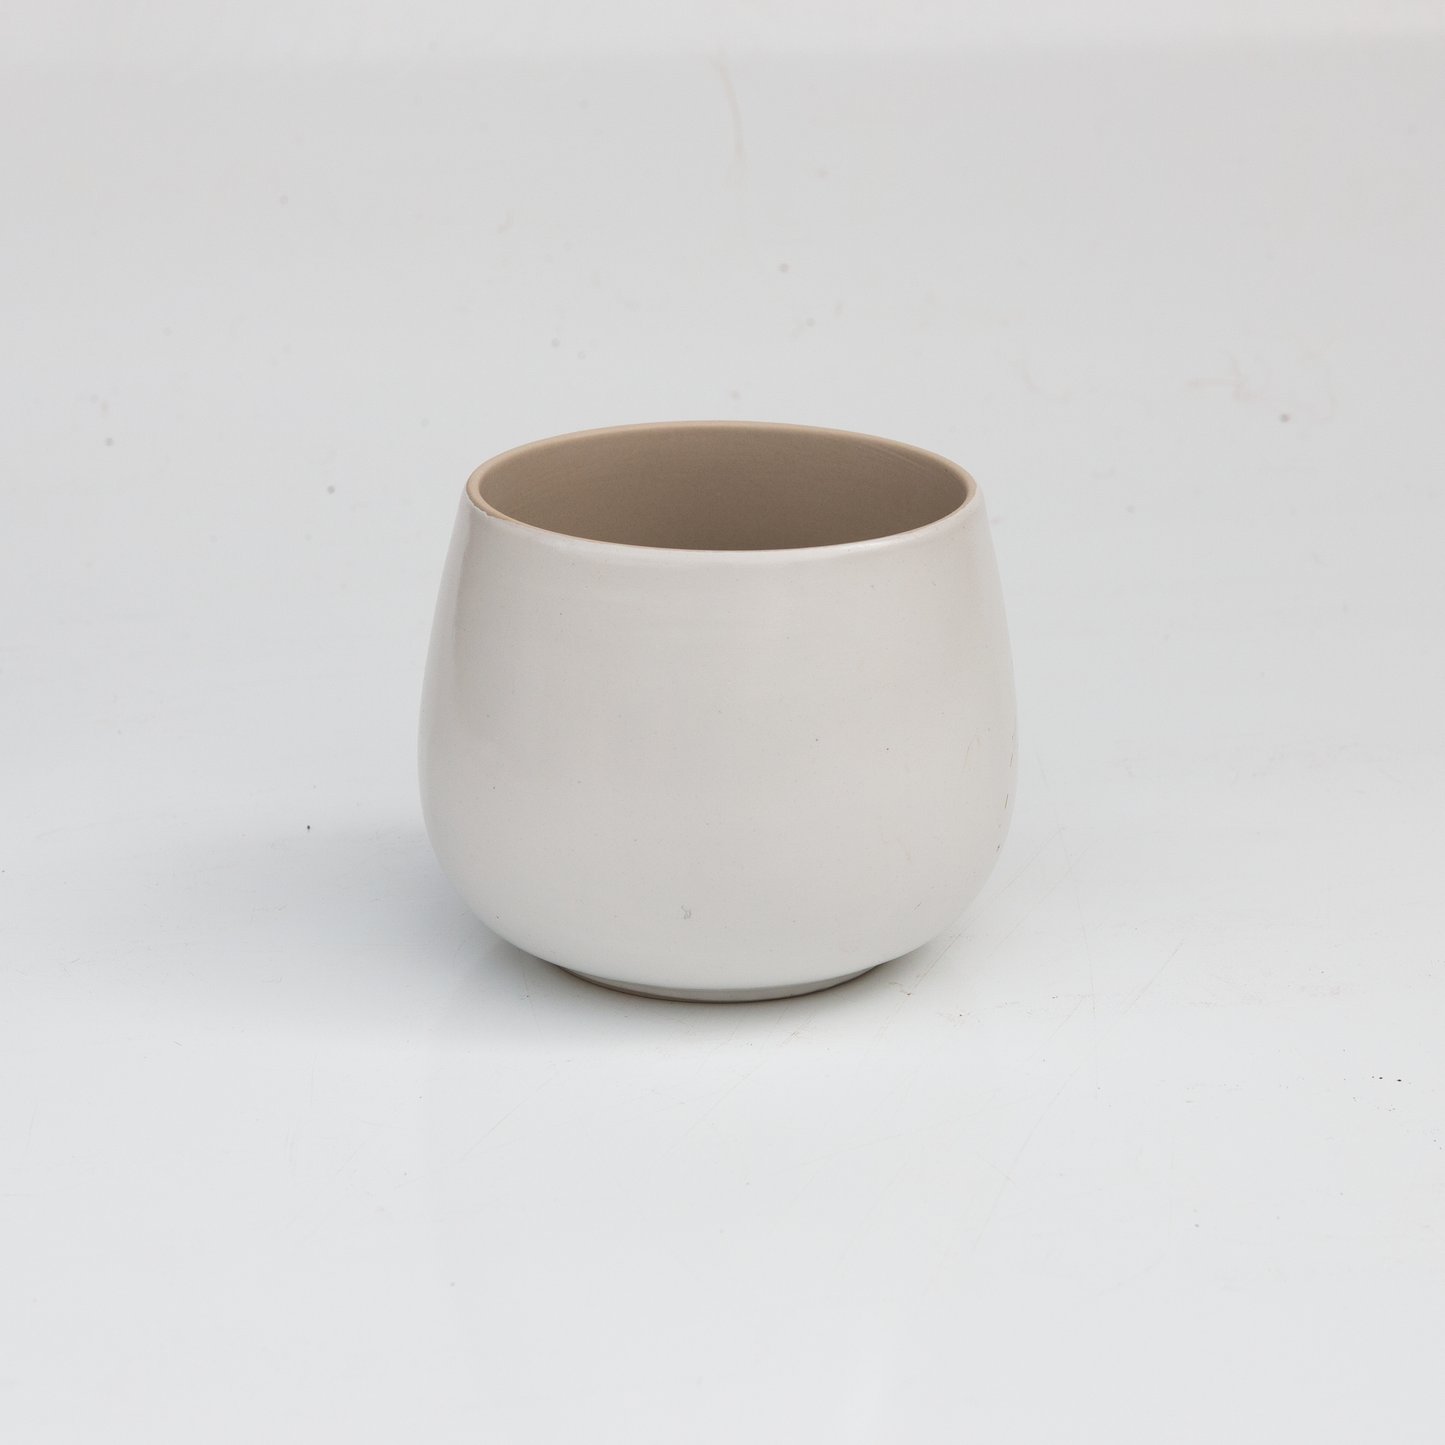 1x Ceramic Pot - Assorted Colours